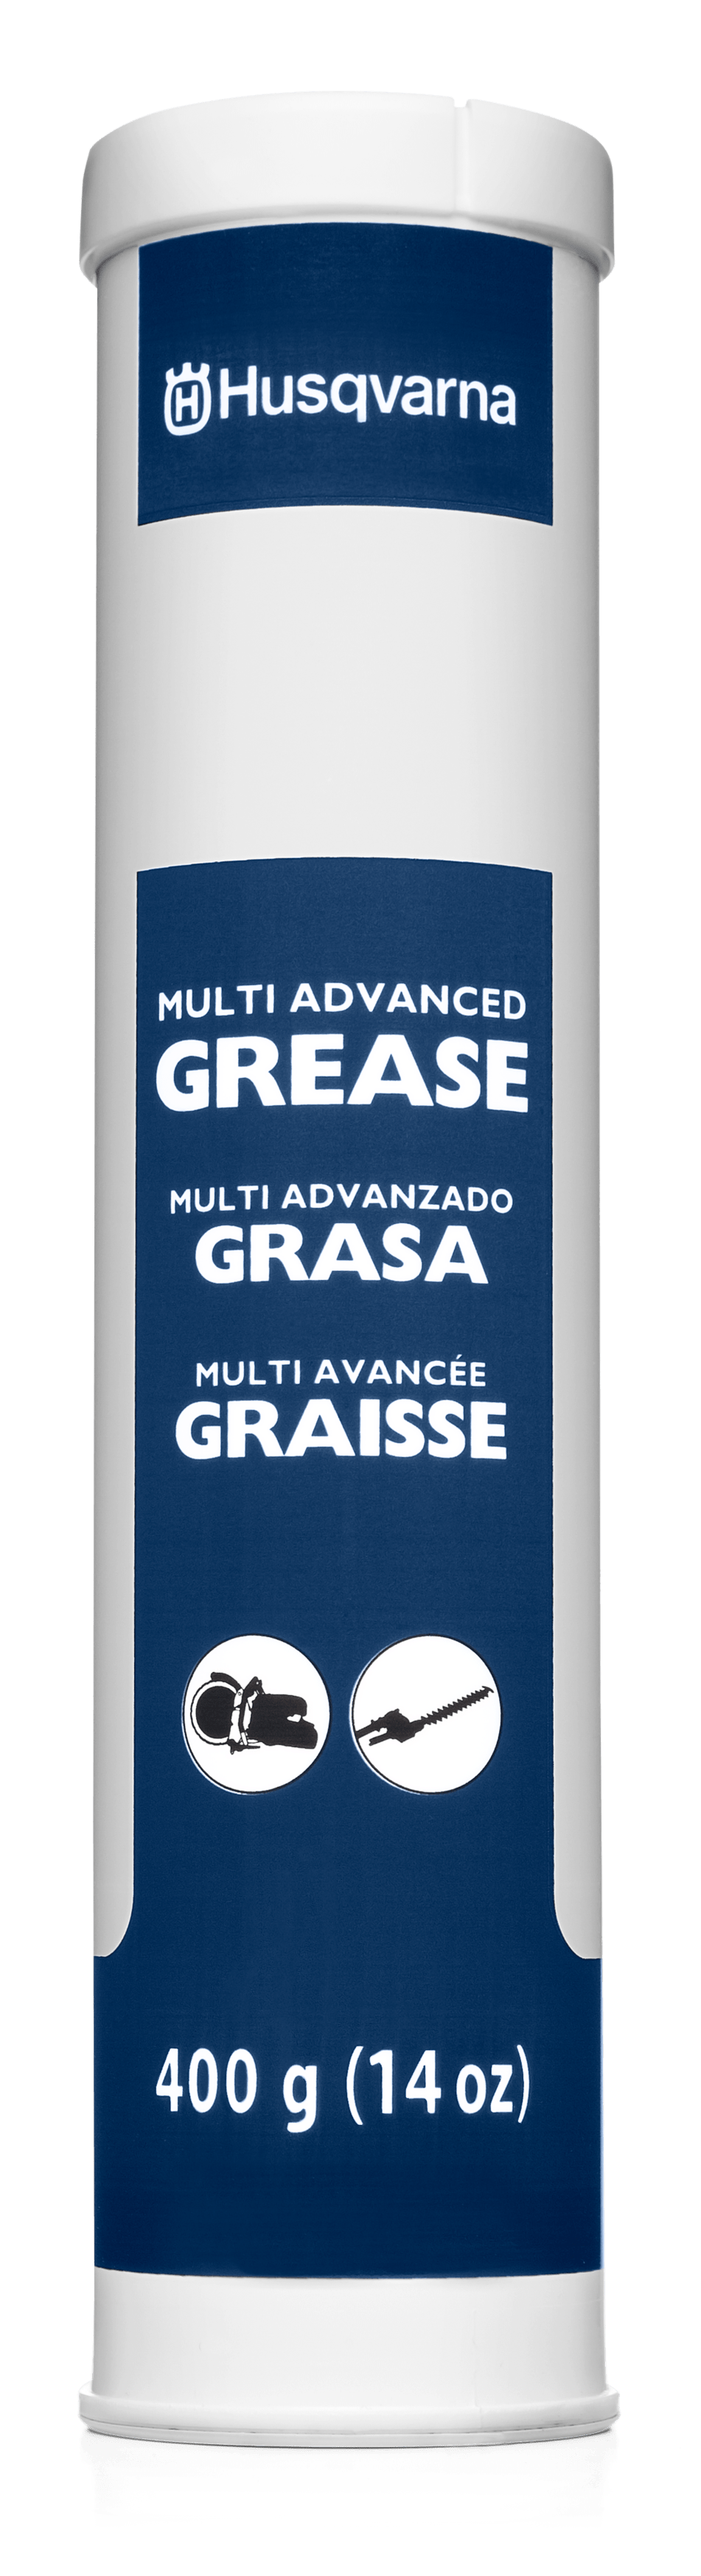 Multi Advanced Grease image 0